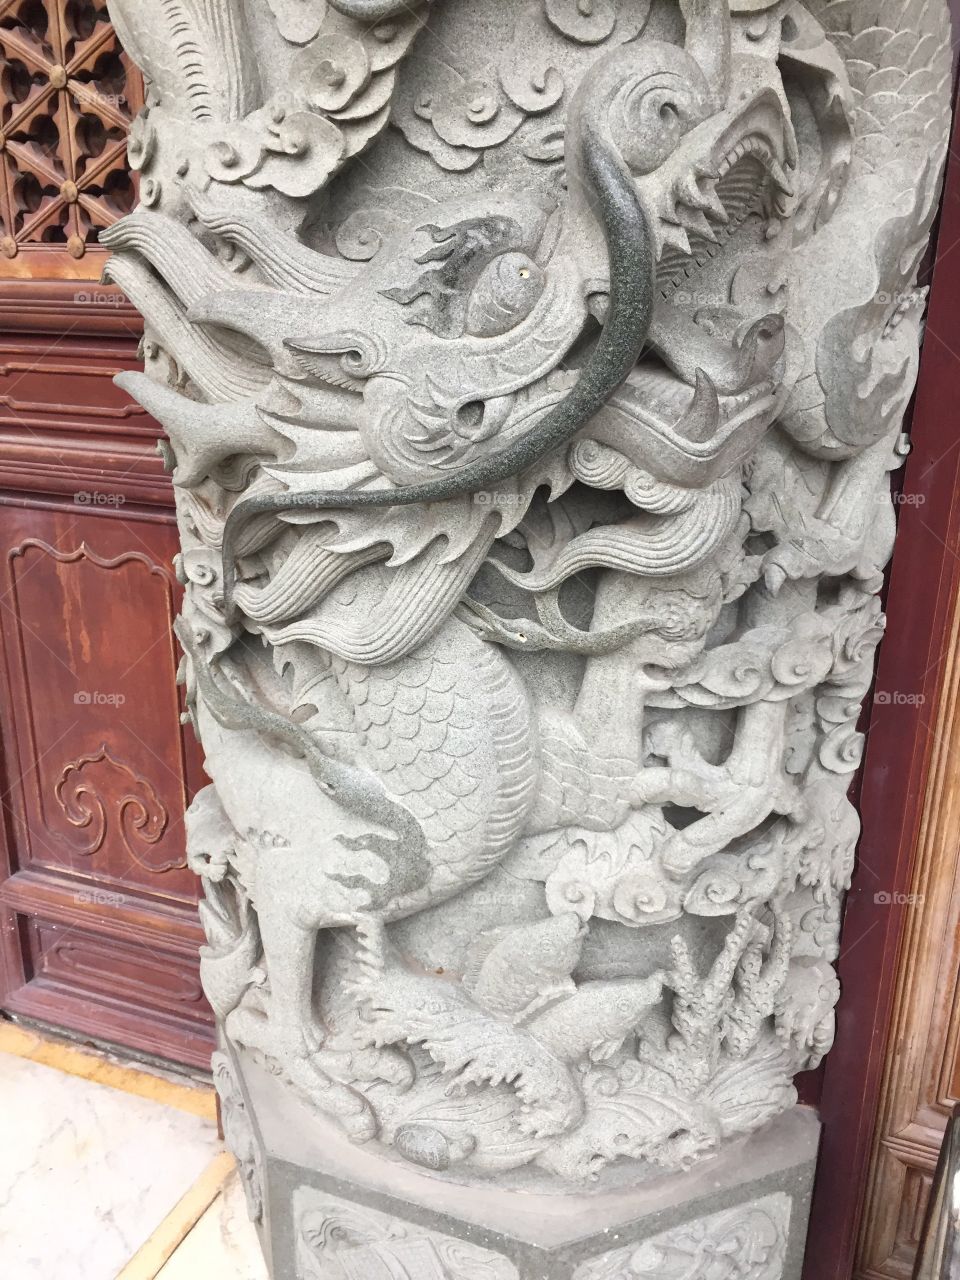 Dragons and Lions on The Po Lin Monastery. Ngong Ping Village, Po Lin Monastery, Lantau Island, Hong Kong. 